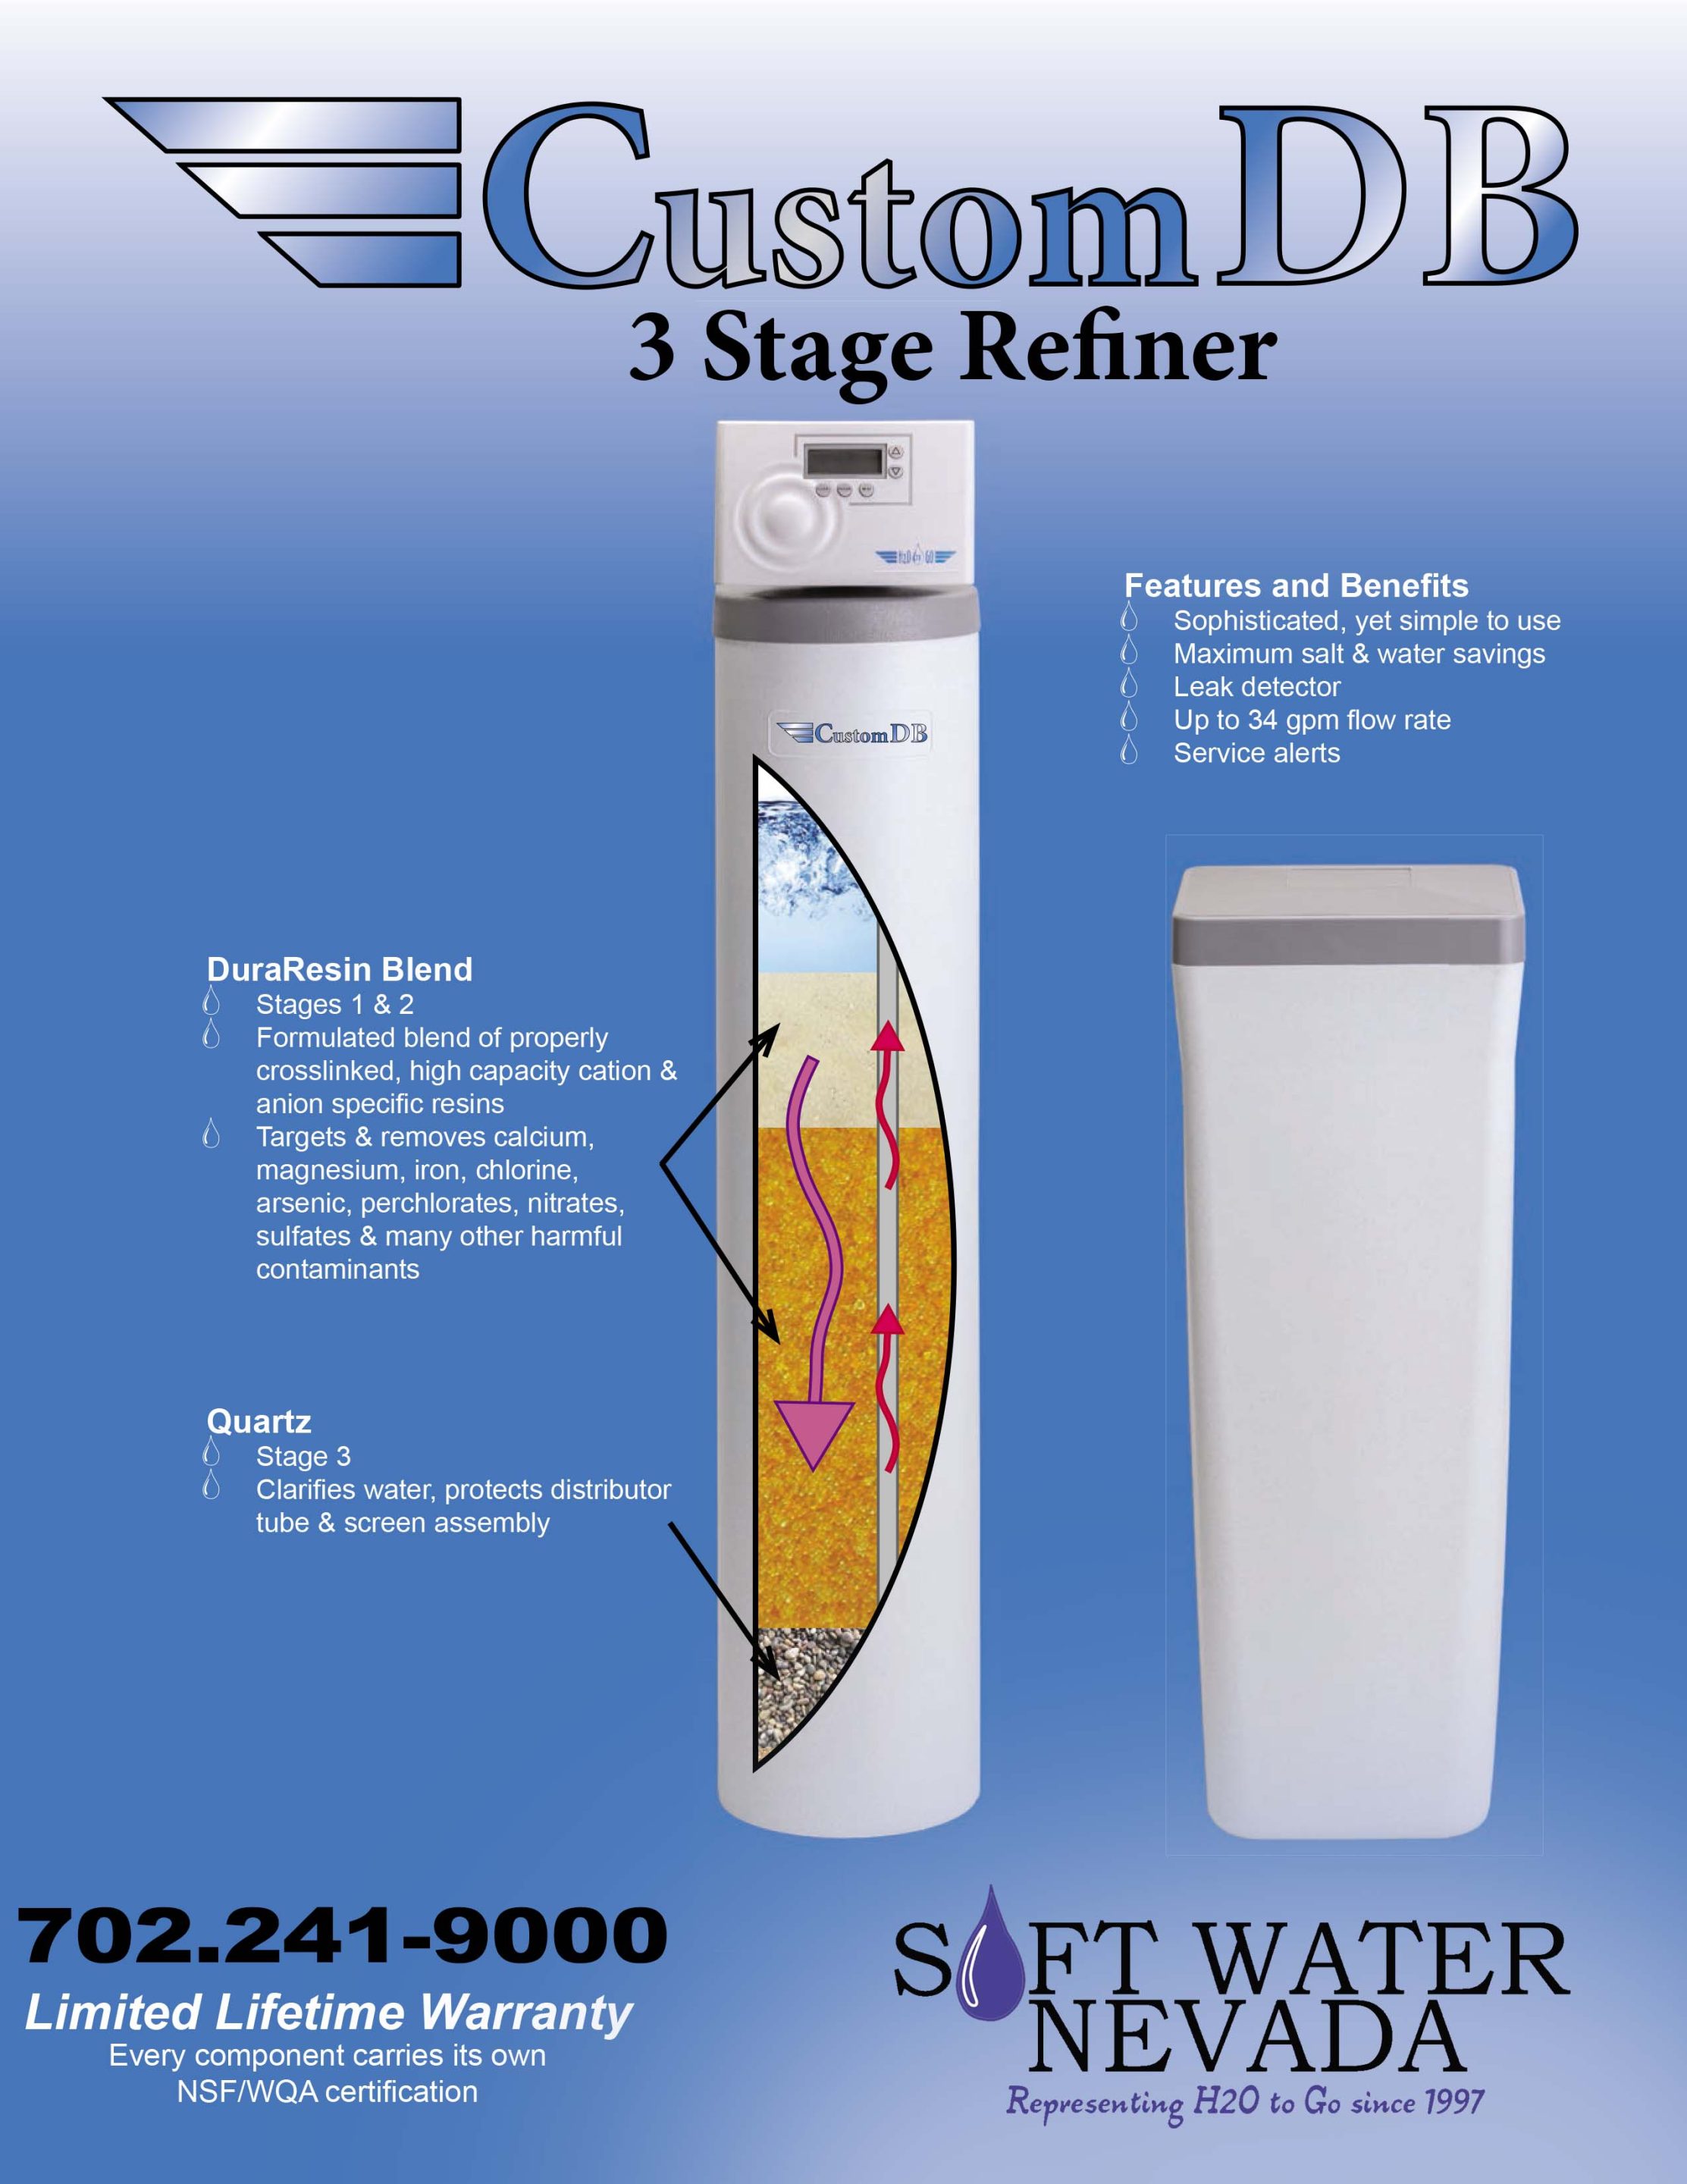 Home Water Refiner for Las Vegas Hard Water